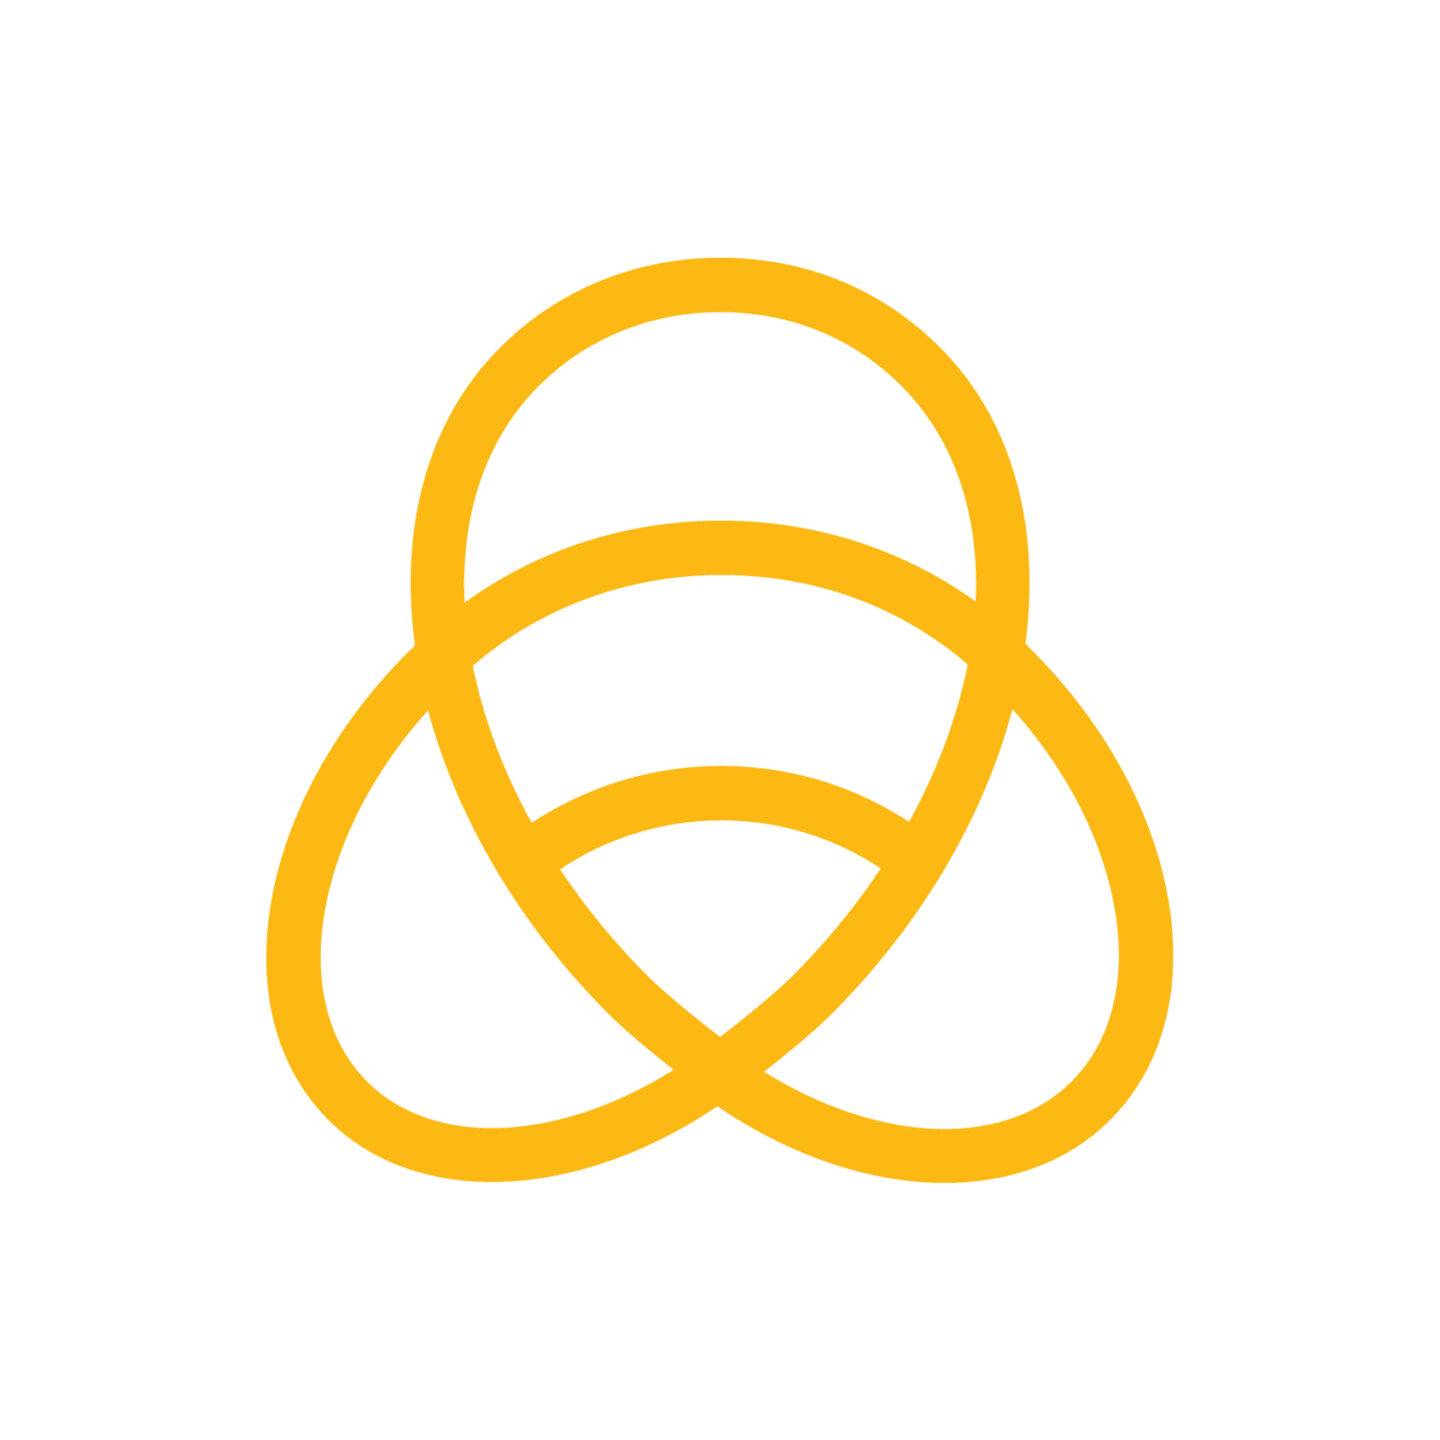 eLearning Industry_symbol_yellow (1) (002)